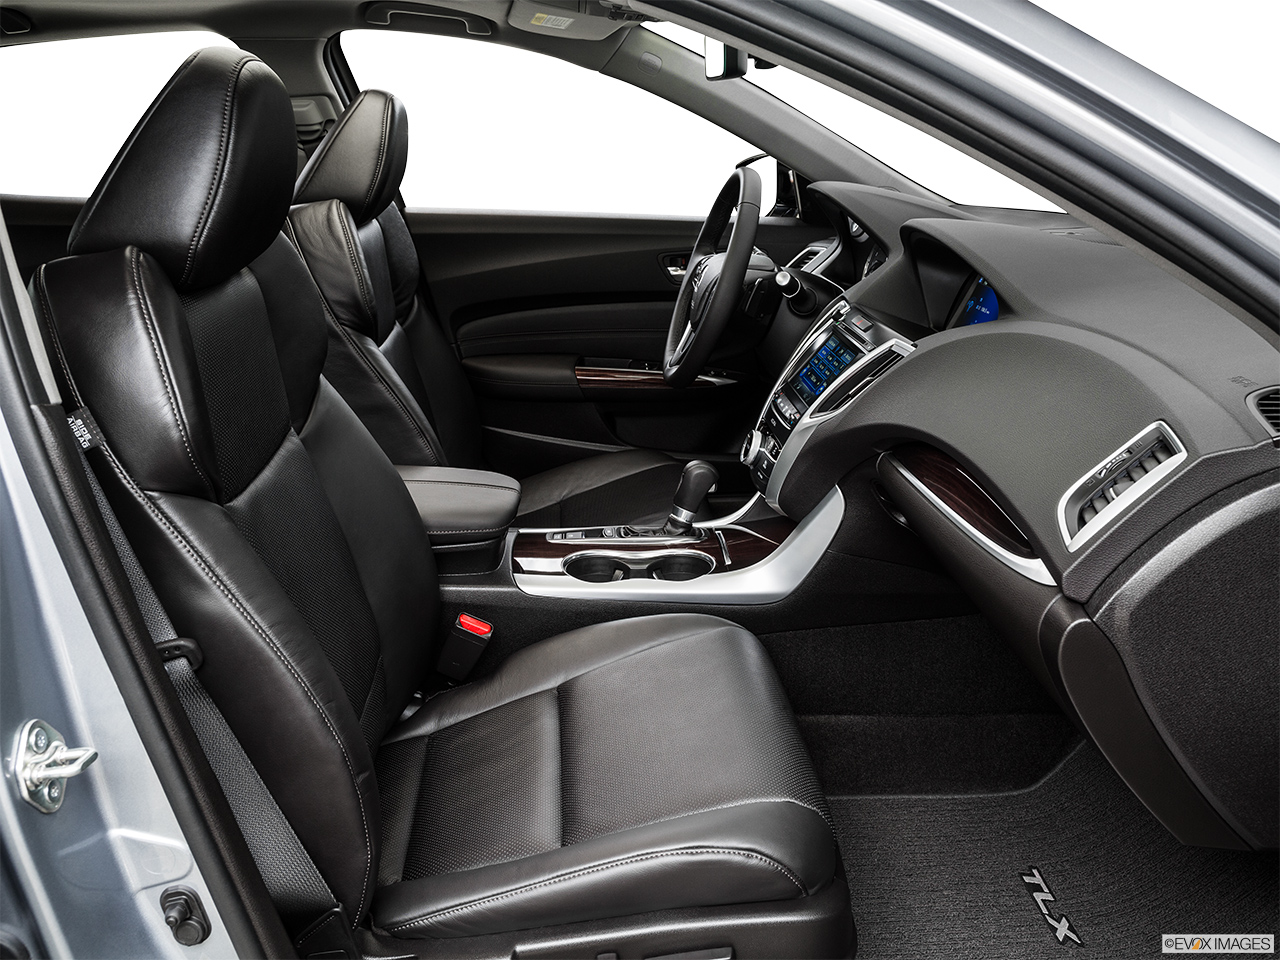 2015 Acura TLX 2.4 8-DCP P-AWS Passenger seat. 